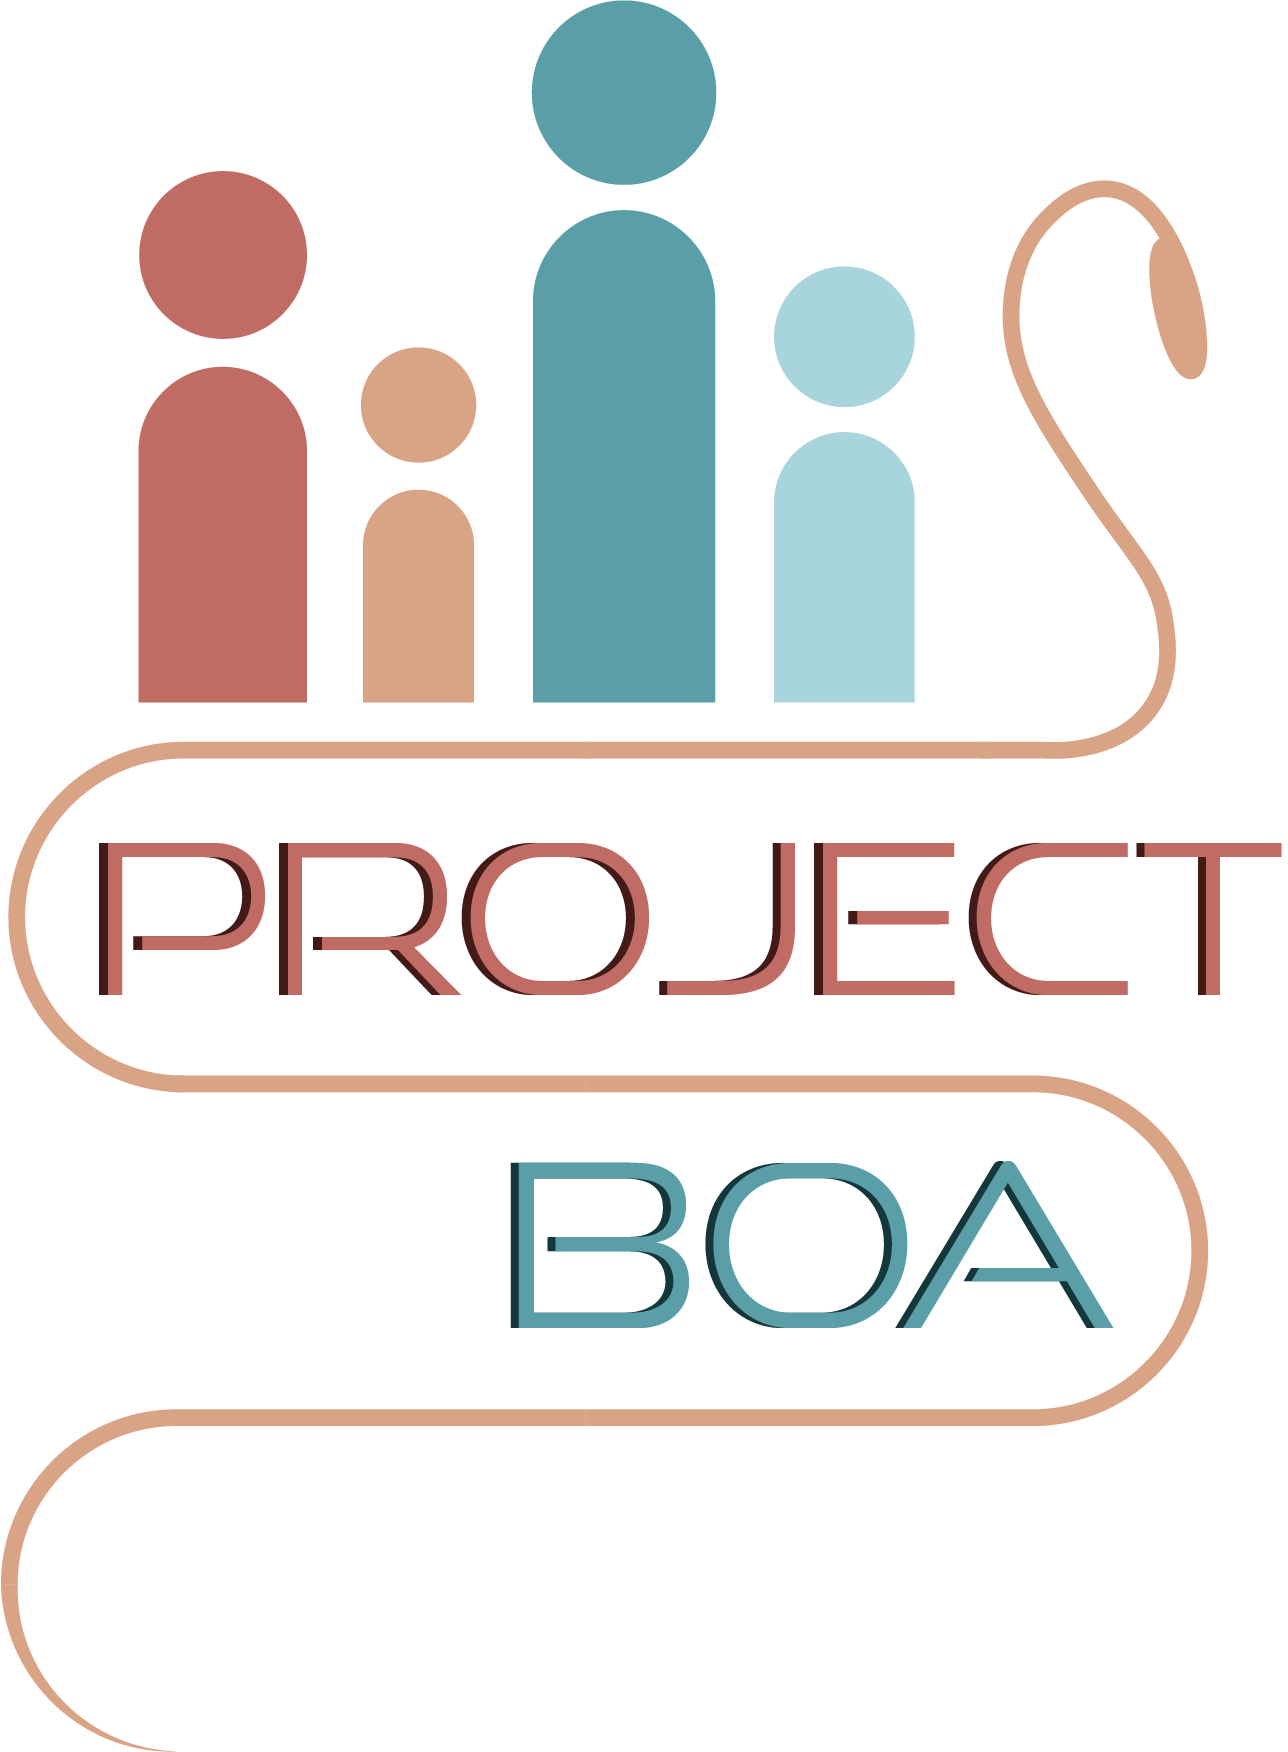 Project BOA logo SOS International member